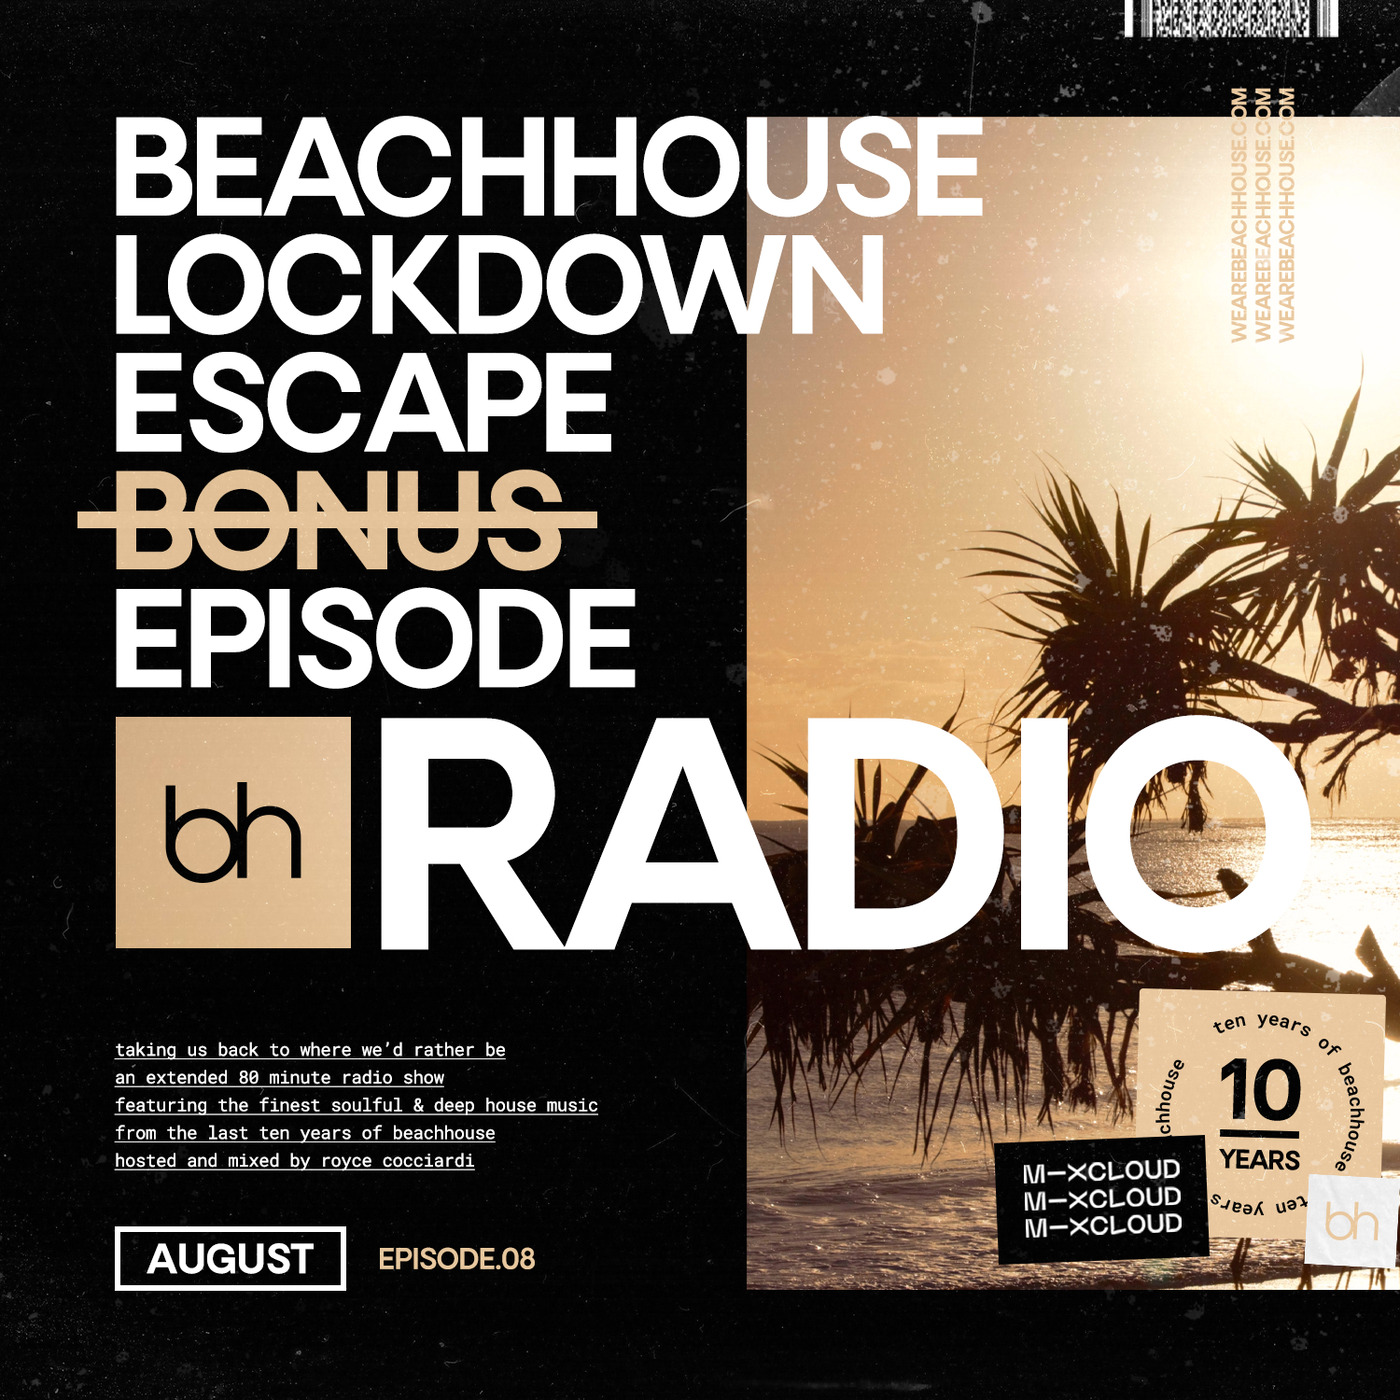 Beachhouse RADIO - August 2020 - Lockdown Escape - Episode 08